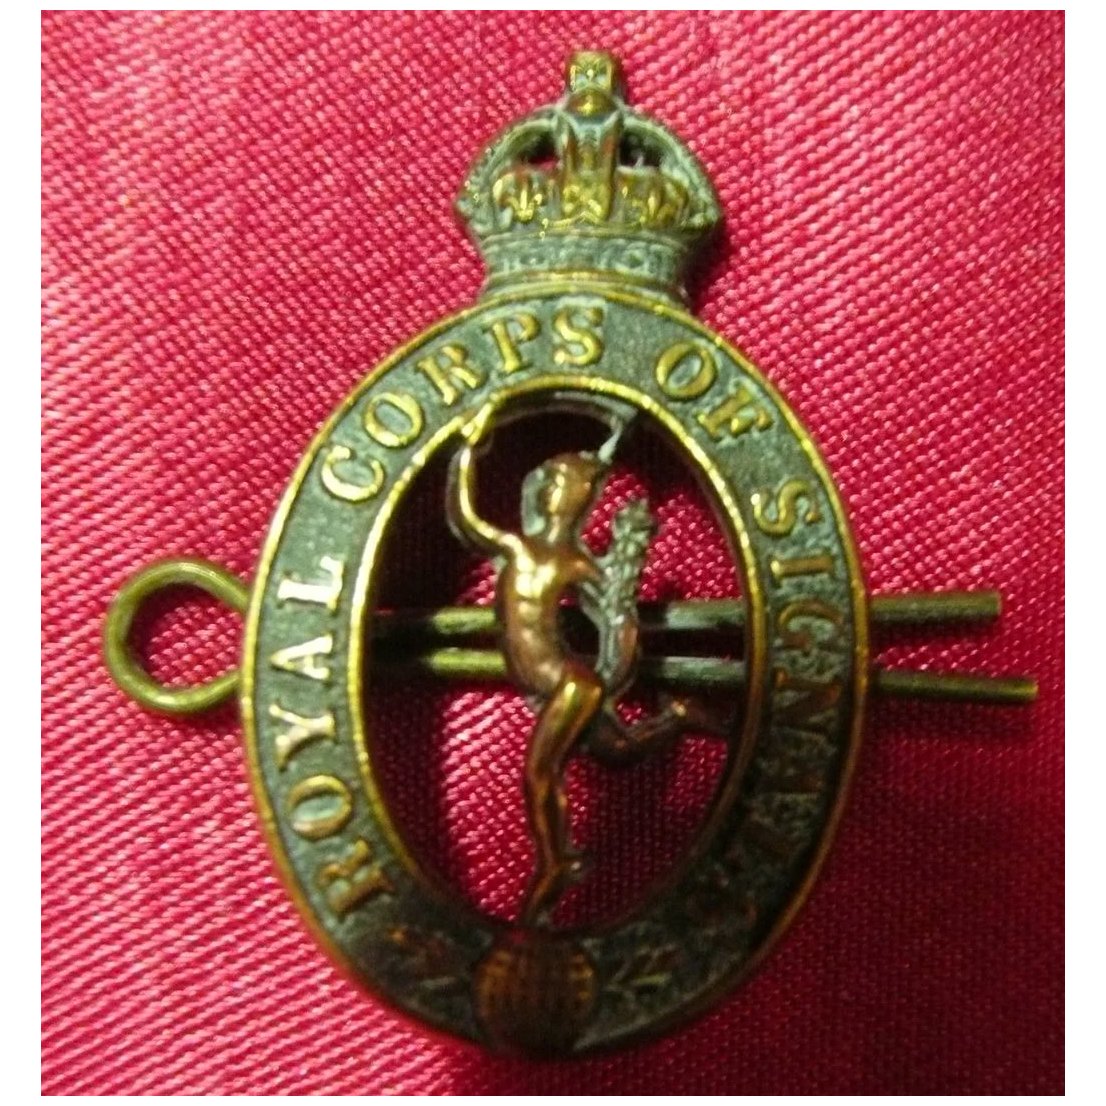 WW1 British Army Badge - Royal Corps of Signals